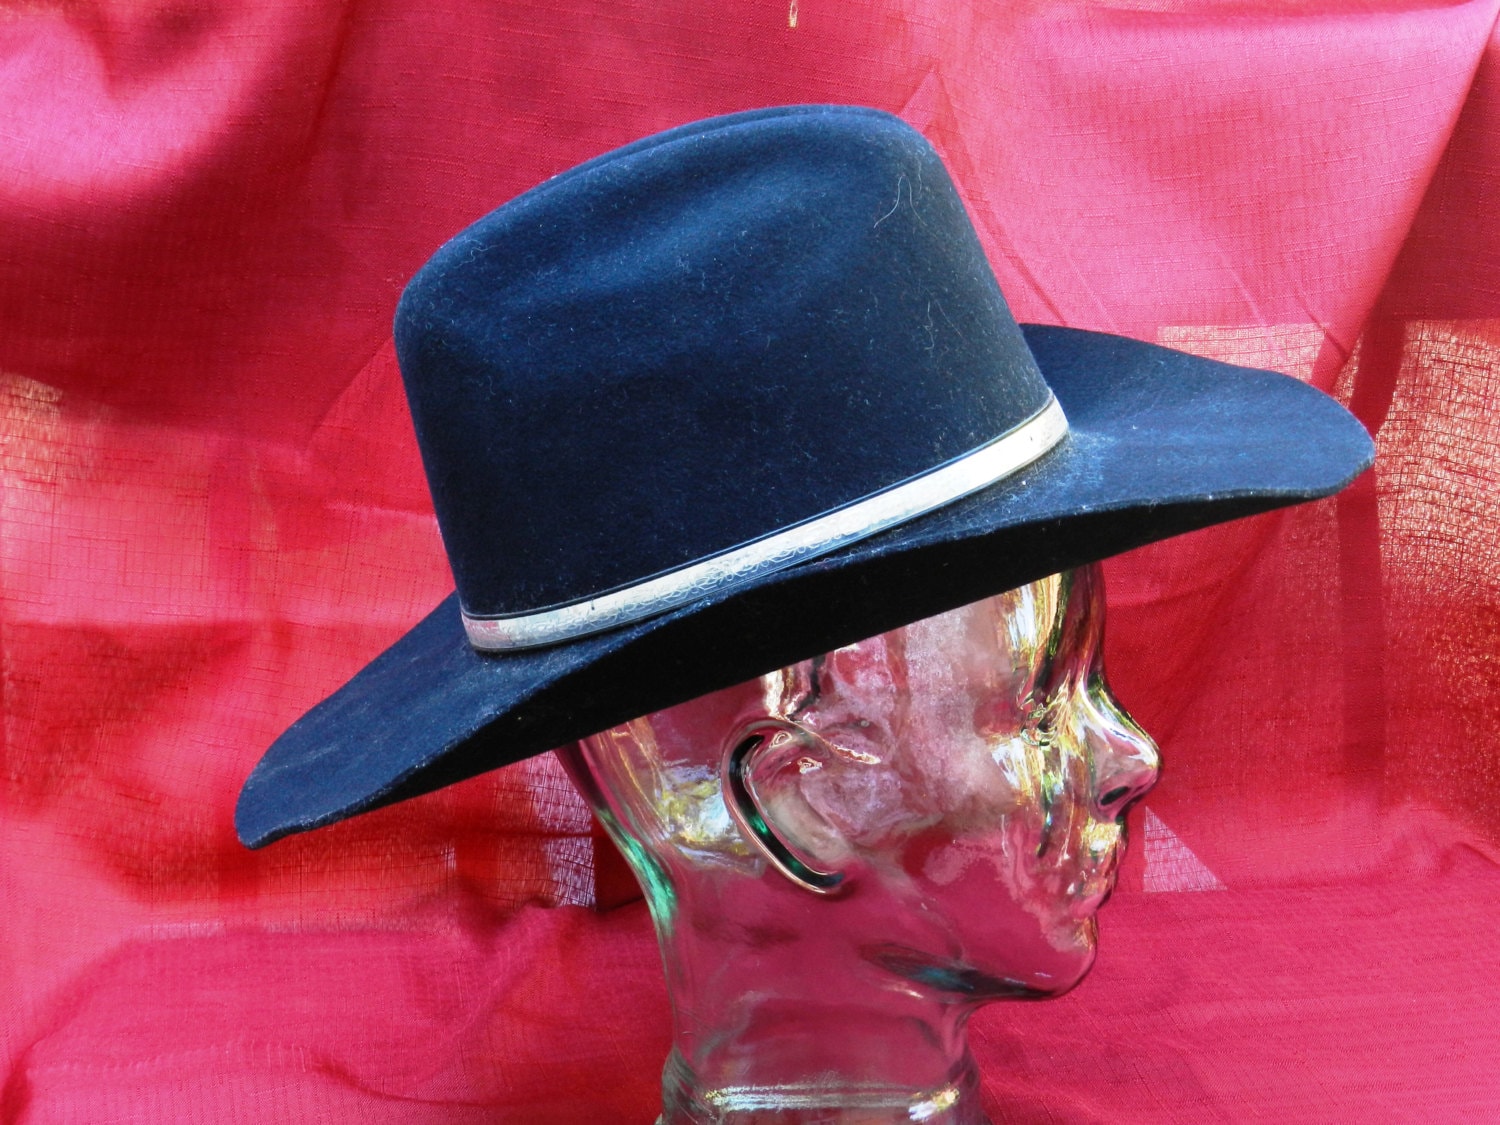 D&Y Wide Brim Felt Tan Fedora Hat With Faux Leather Ribbon